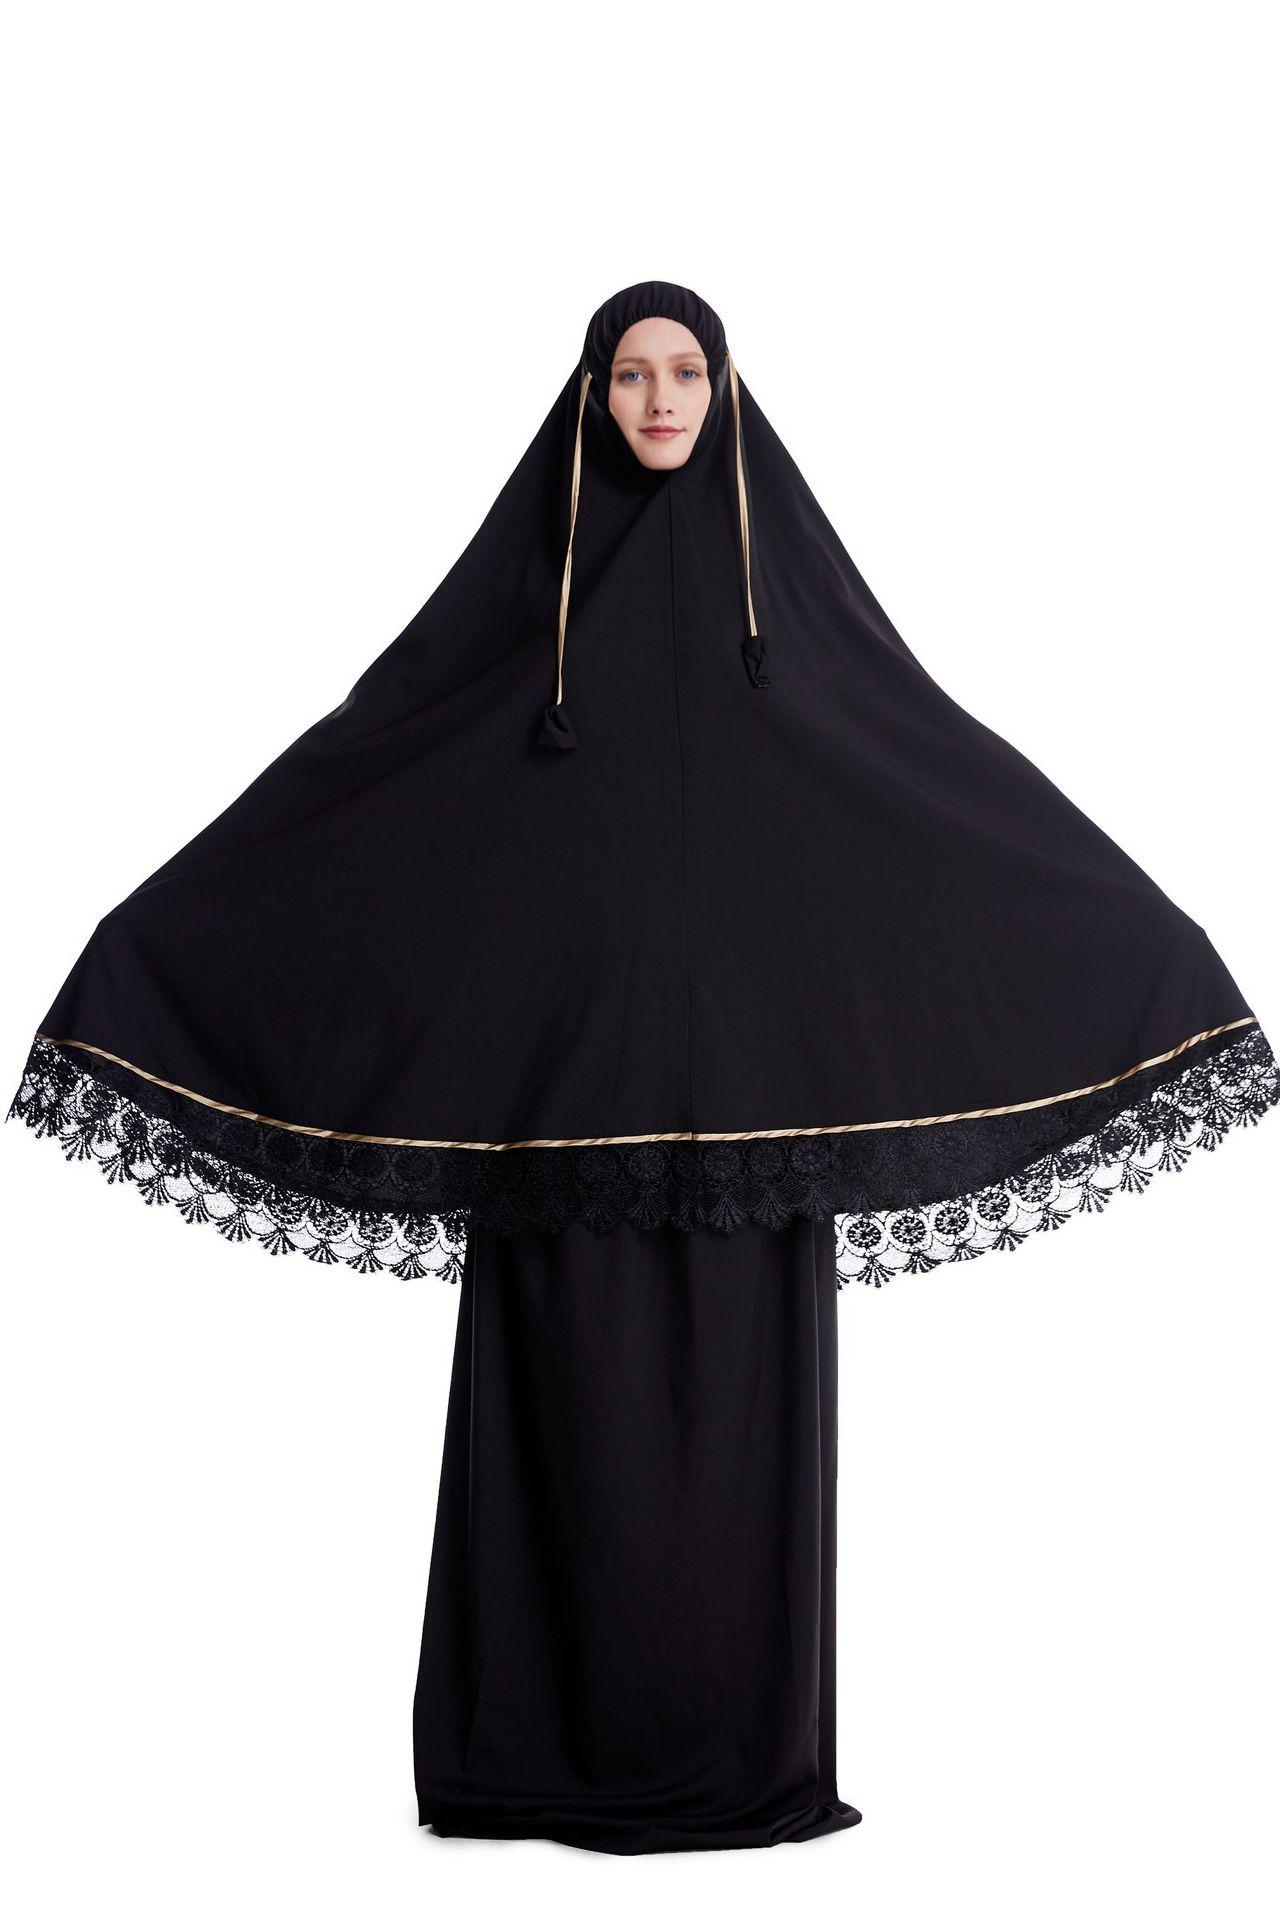 Ramadan Women 2 Piece Muslim Prayer Set Khimar Abaya Overhead Hijab+Skirt Full Cover Islam Clothing Middle East Worship Service